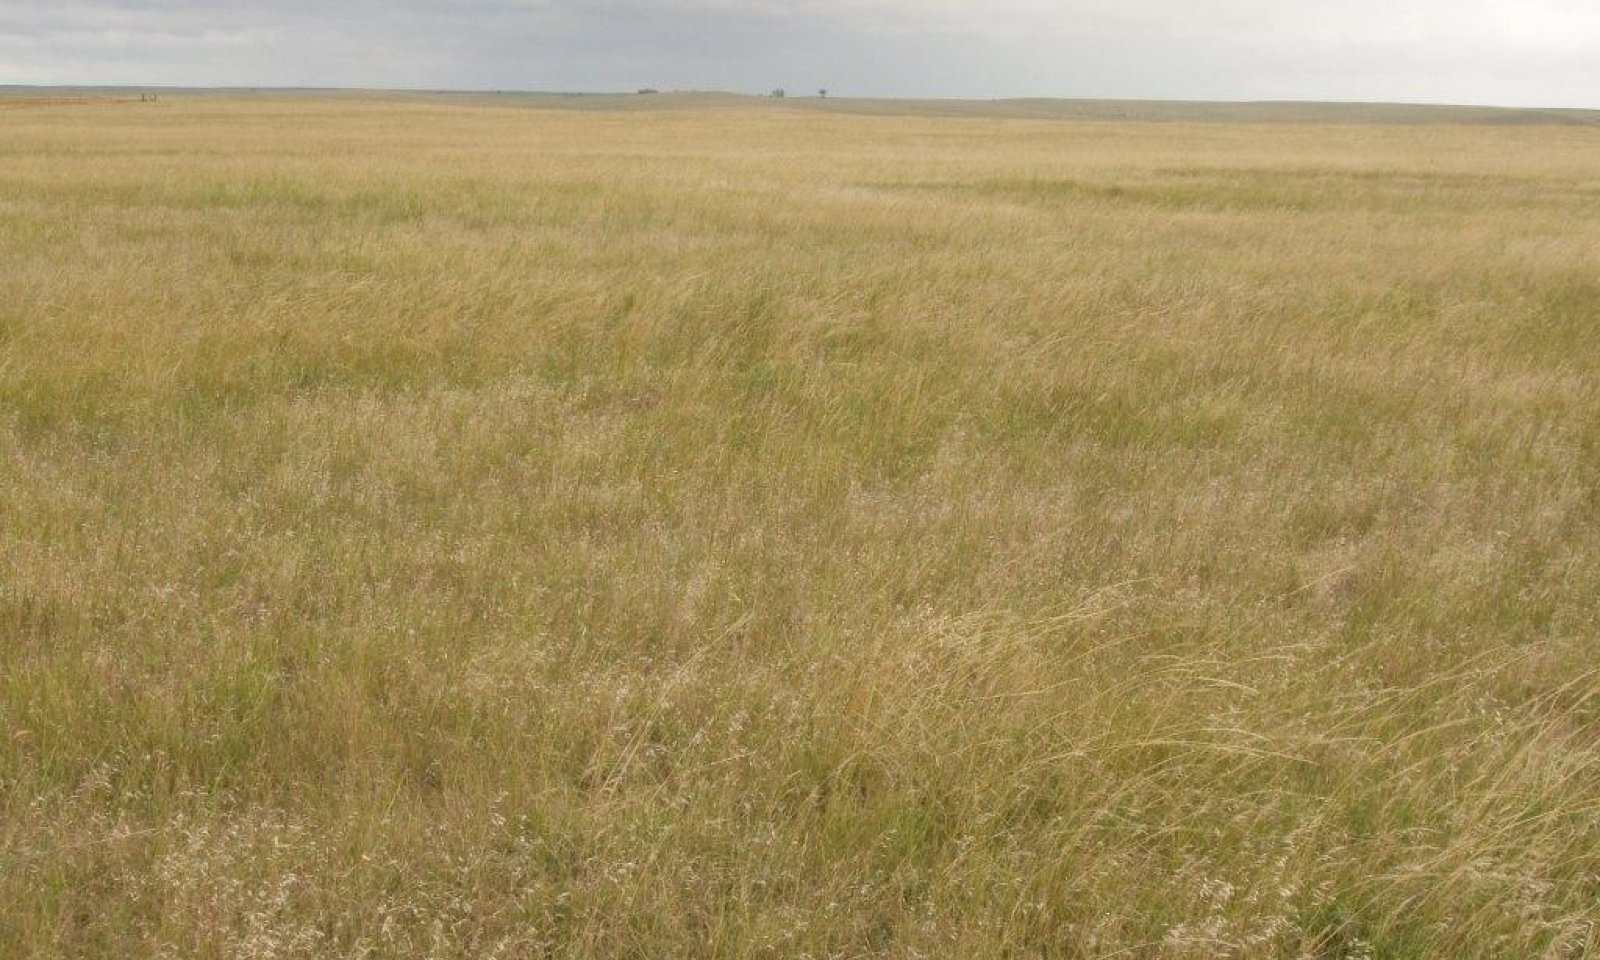 Nebraska ag land values grew 14% last year, UNL survey finds